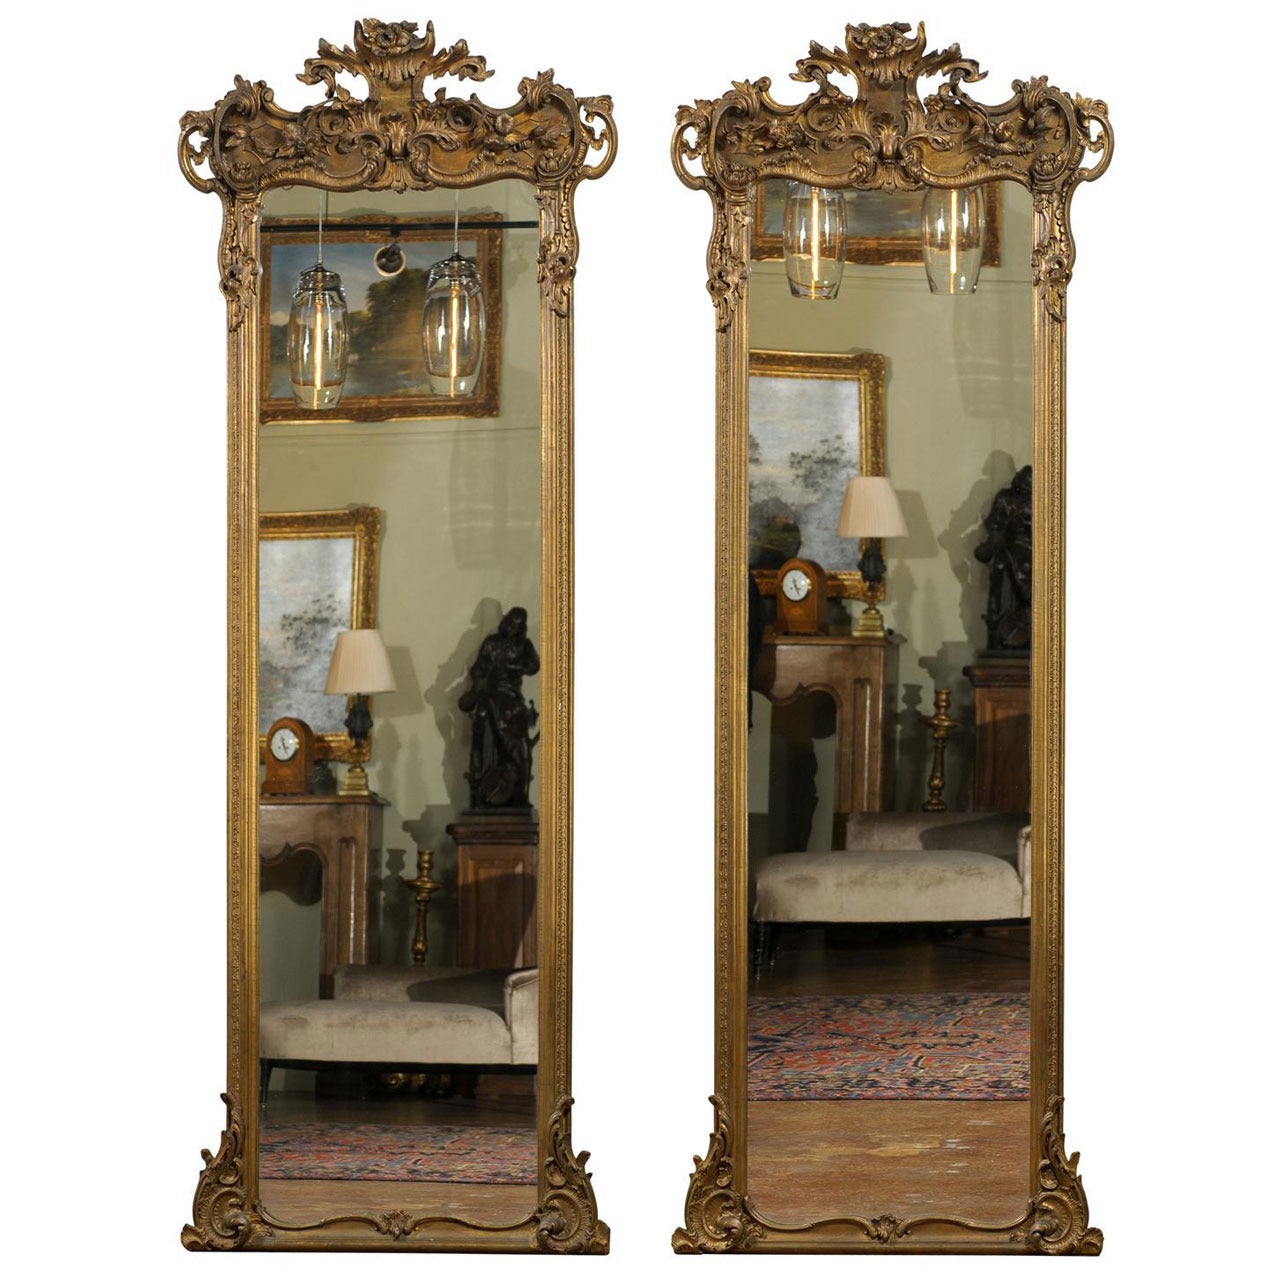 Pair of Ornate Pier Mirrors